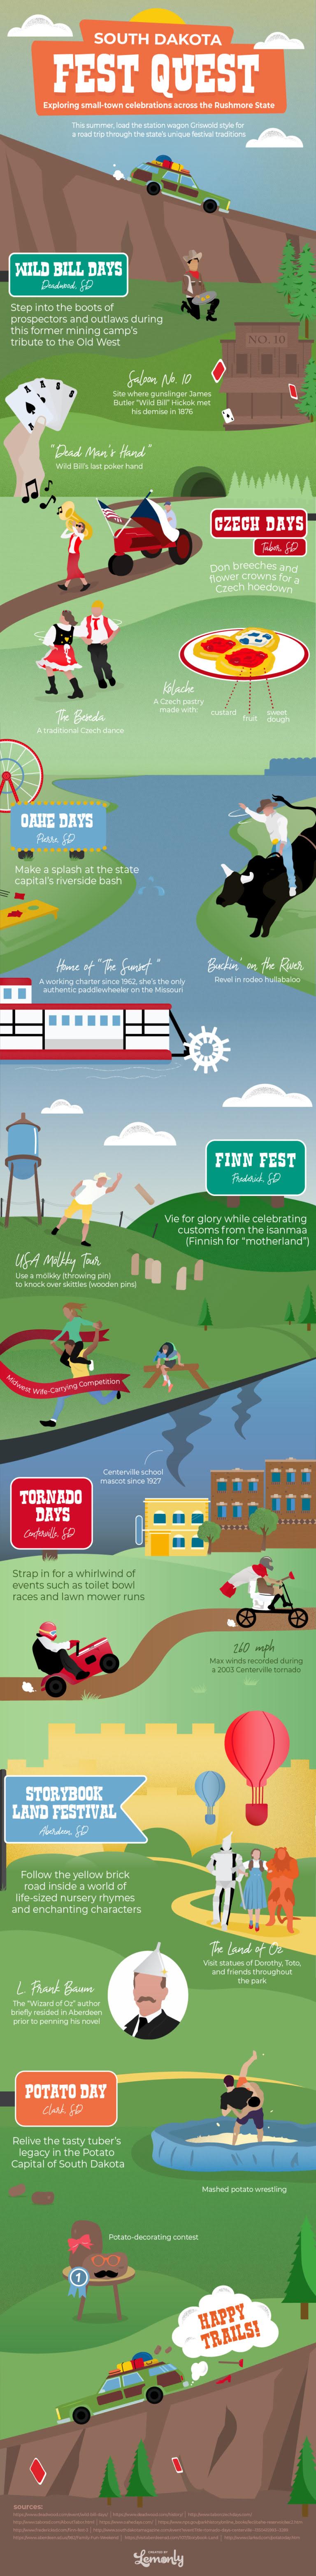 South DAKOTA summer festivals #infographic